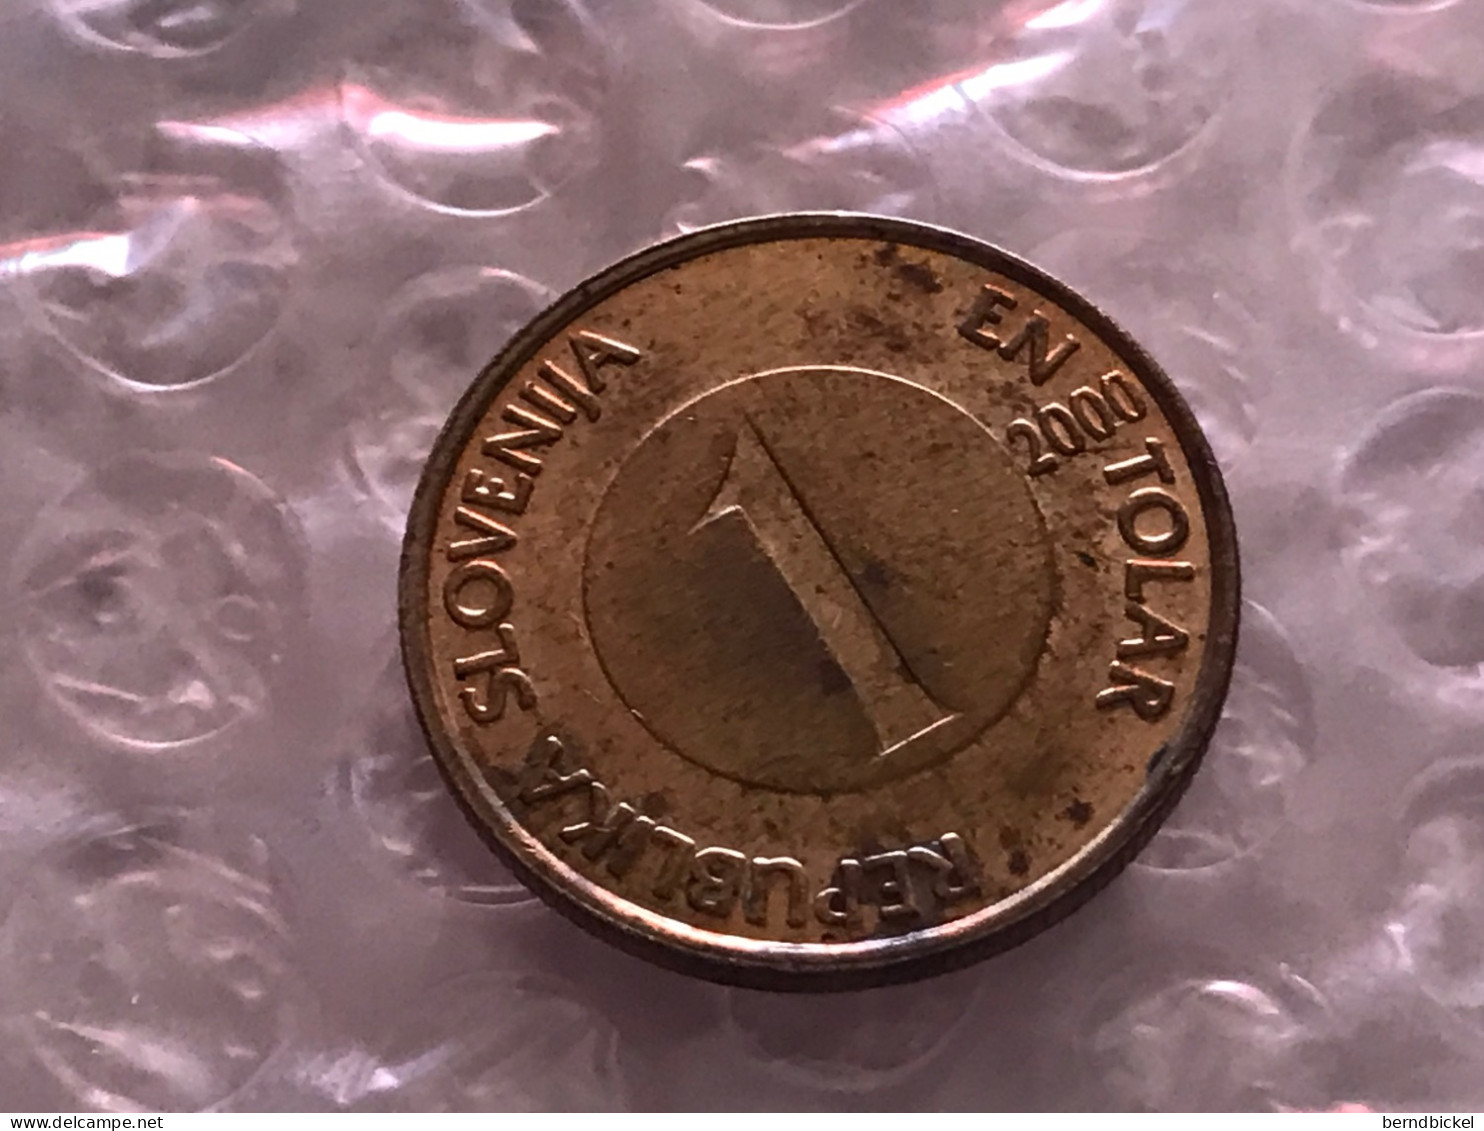 Münze Münzen Umlaufmünze Slowenien 1 Tolar 2000 - Slowenien